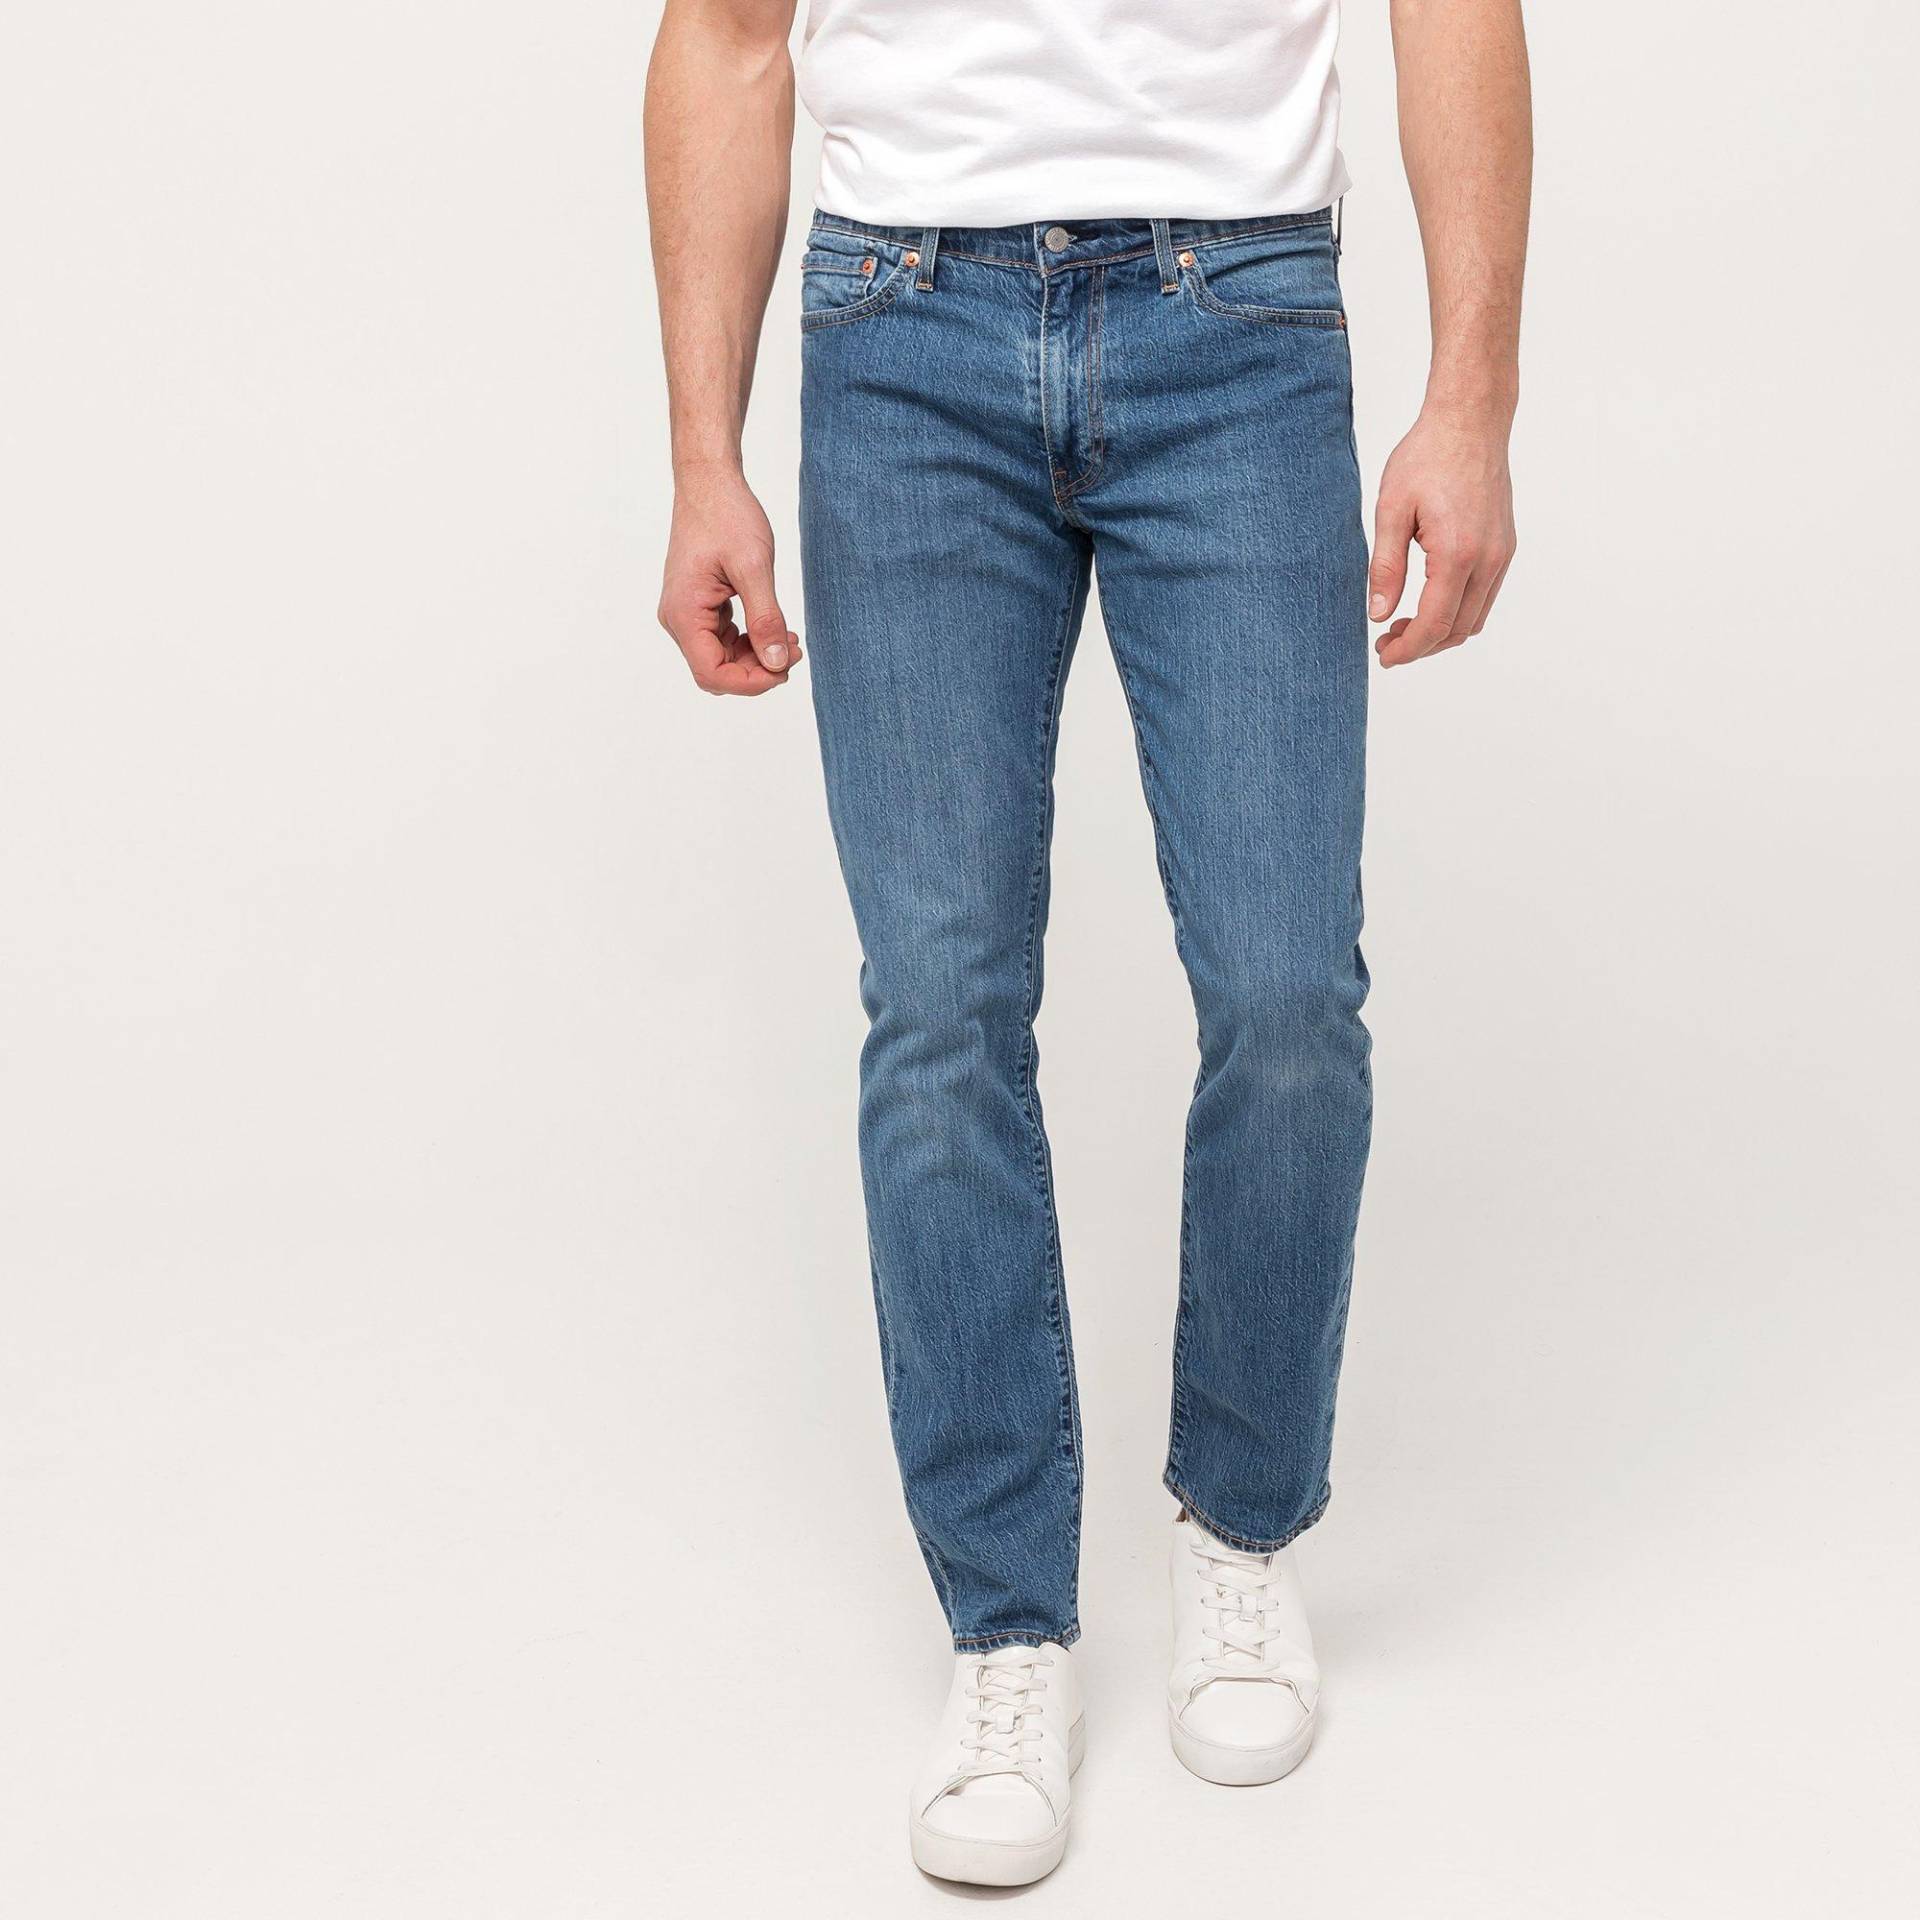 Jeans, Slim Fit Herren Blau Denim L34/W32 von Levi's®